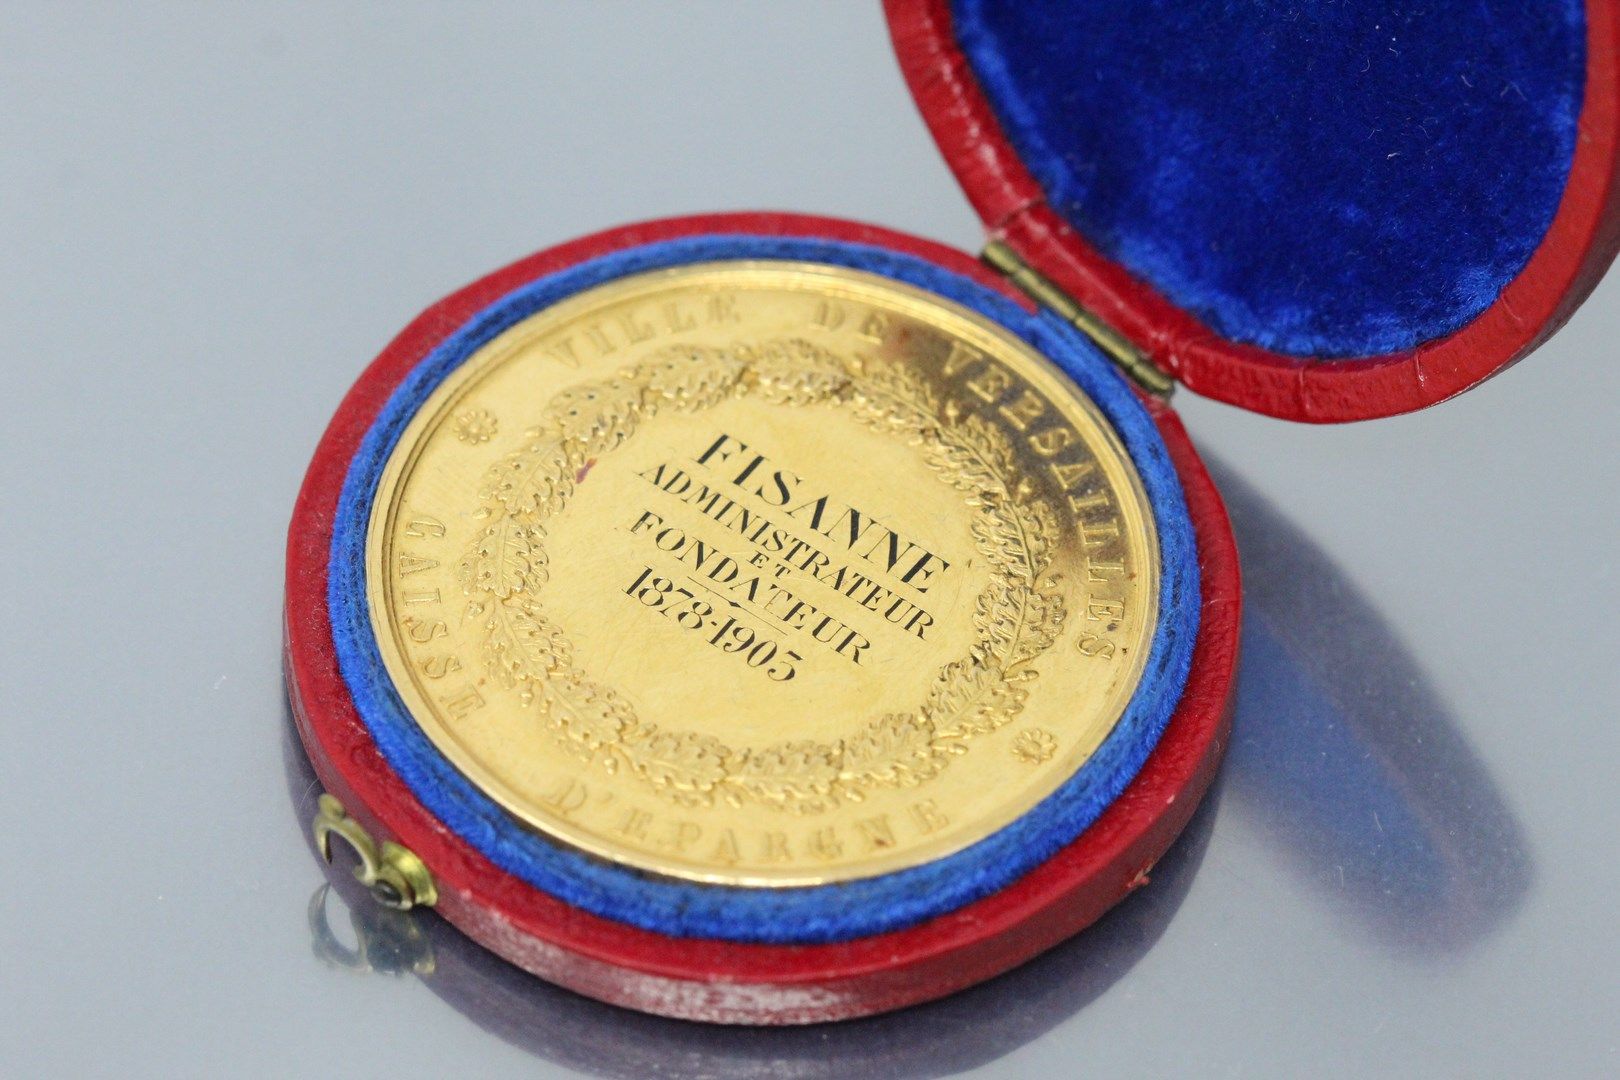 Null 罕见的黄金民用奖章（916），授予作为凡尔赛储蓄银行创始人和管理者的菲桑先生。

右边是巴洛克风格的凡尔赛城盾牌，上面有塔楼，两边是两个橡树枝。

签&hellip;